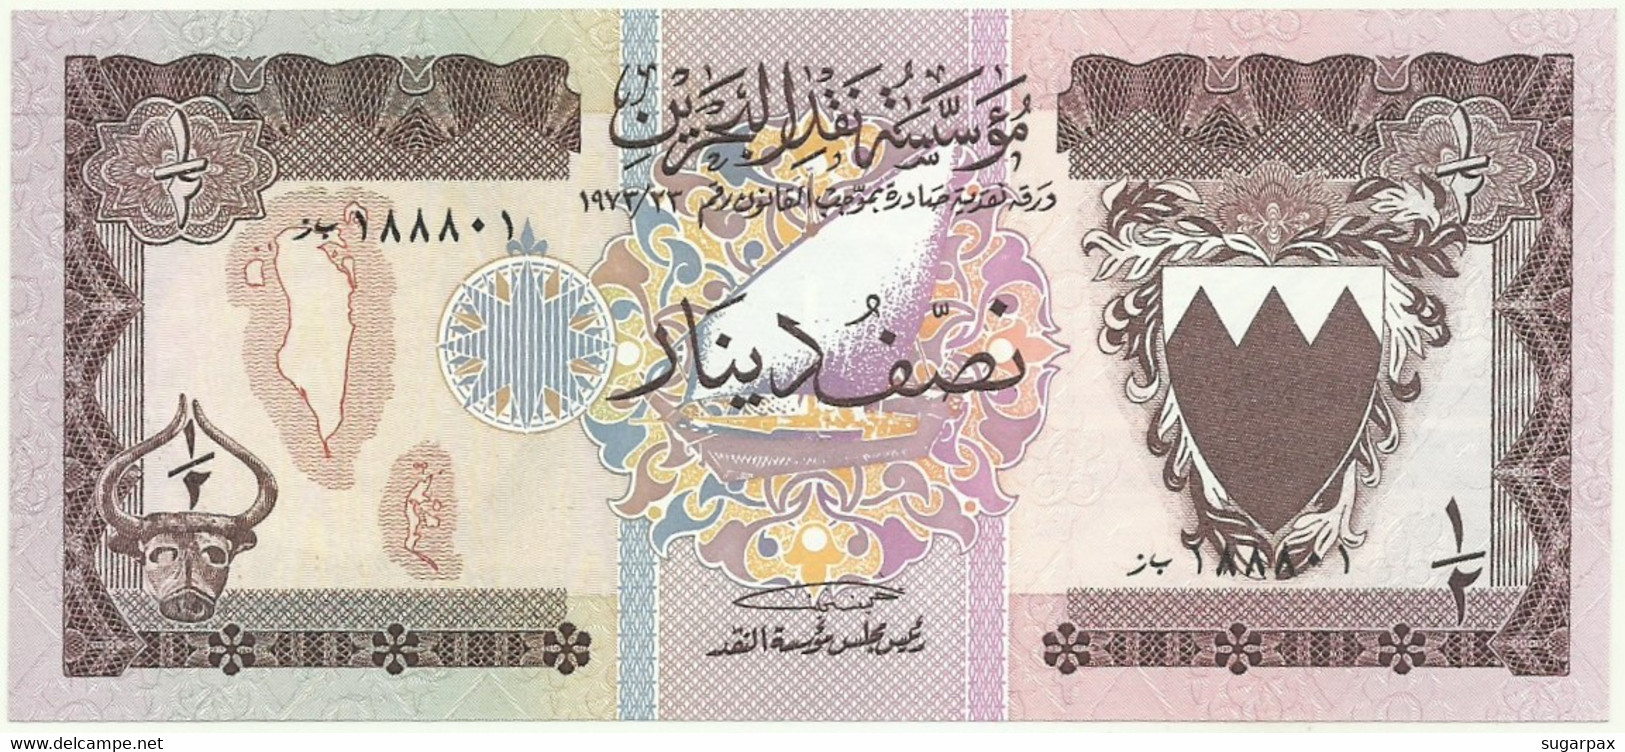 Bahrain - 1/2 Dinar - L. 1973 - Pick 7 - Unc. - Bahrain Monetary Agency - Bahrain